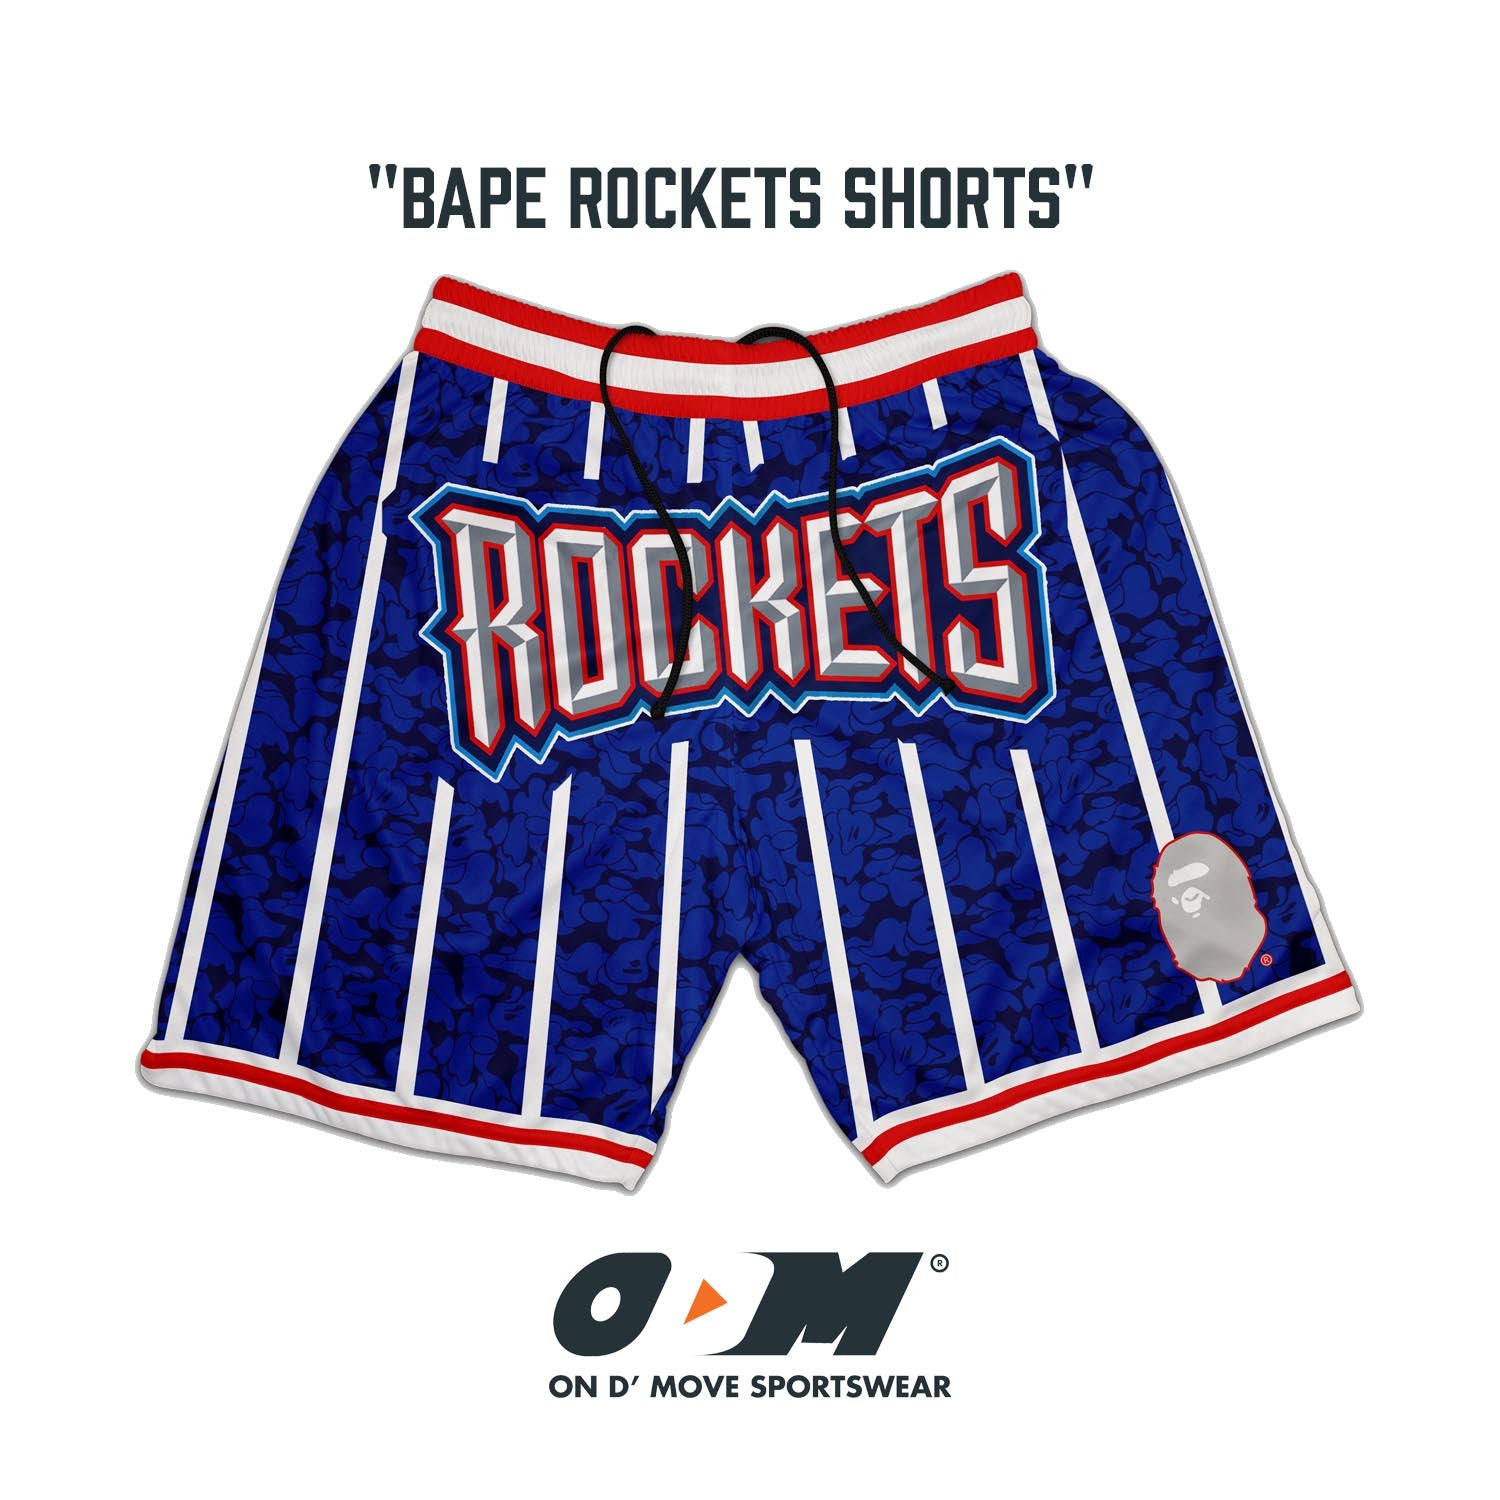 BAPE Rockets Shorts